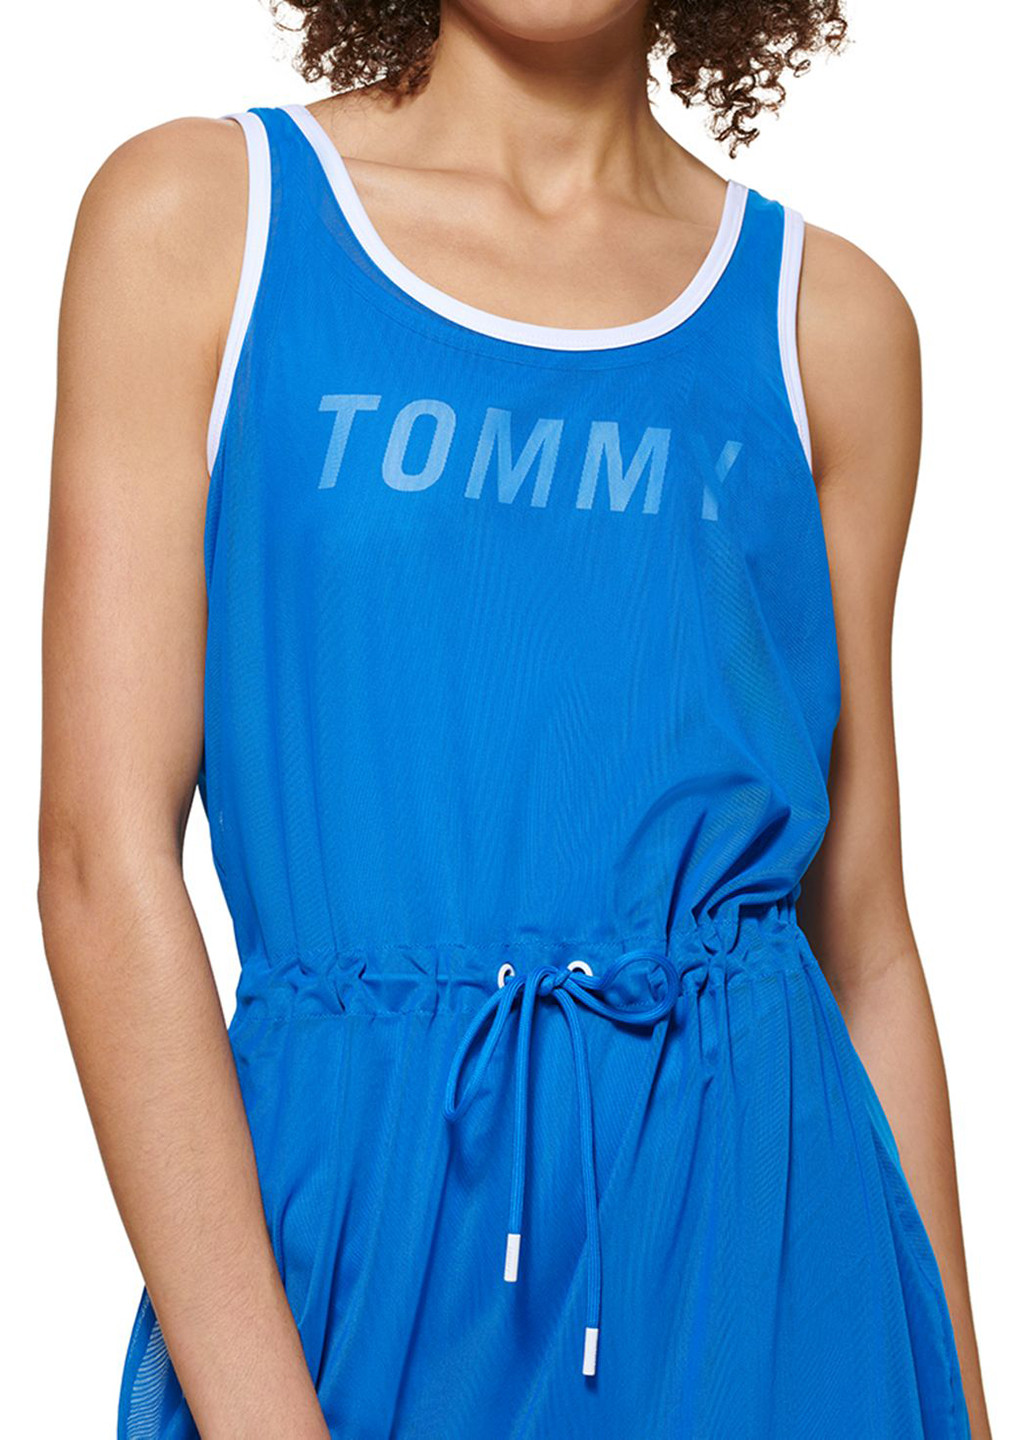 Комбинезон Tommy Hilfiger комбинезон-брюки логотип синий спортивный полиэстер